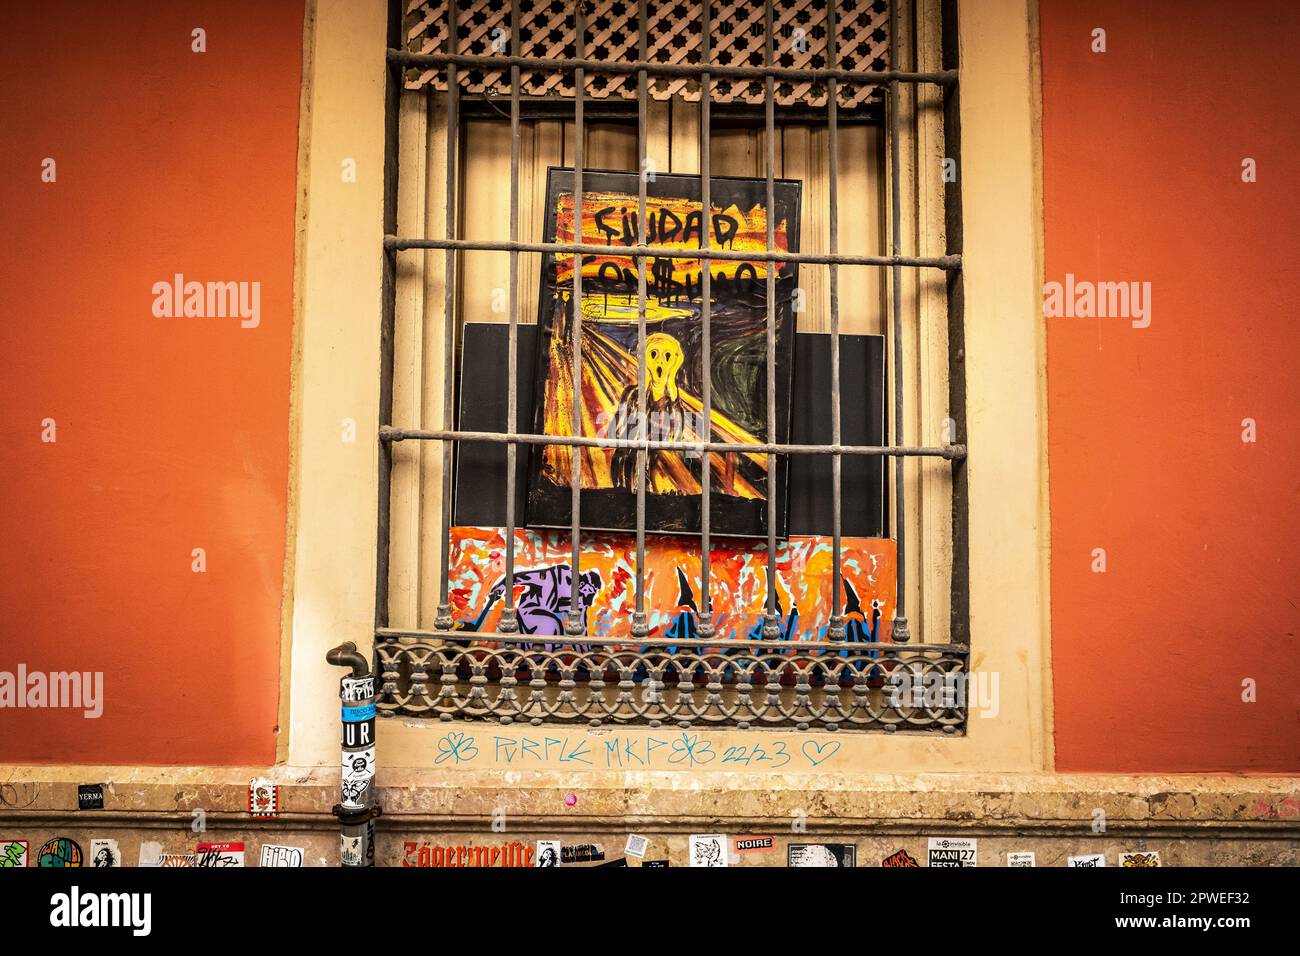 Málaga, Spain - 'Ciudad Con$umo,' poster in a window, overtourism, mass tourism, consumerism Stock Photo